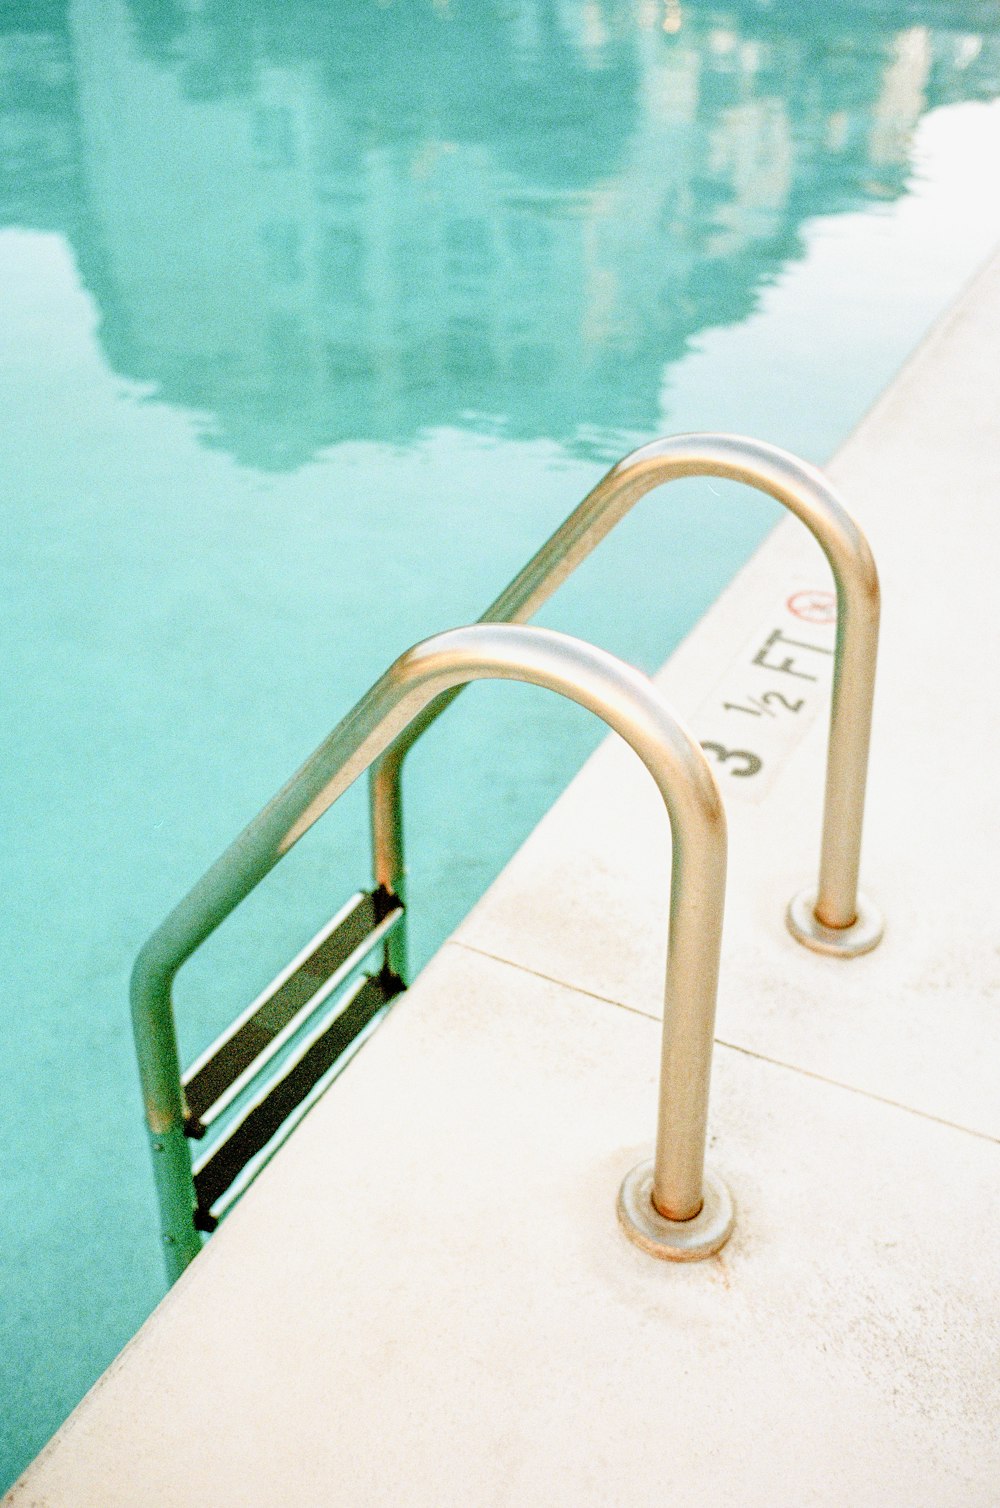 white metal railings near body of water during daytime